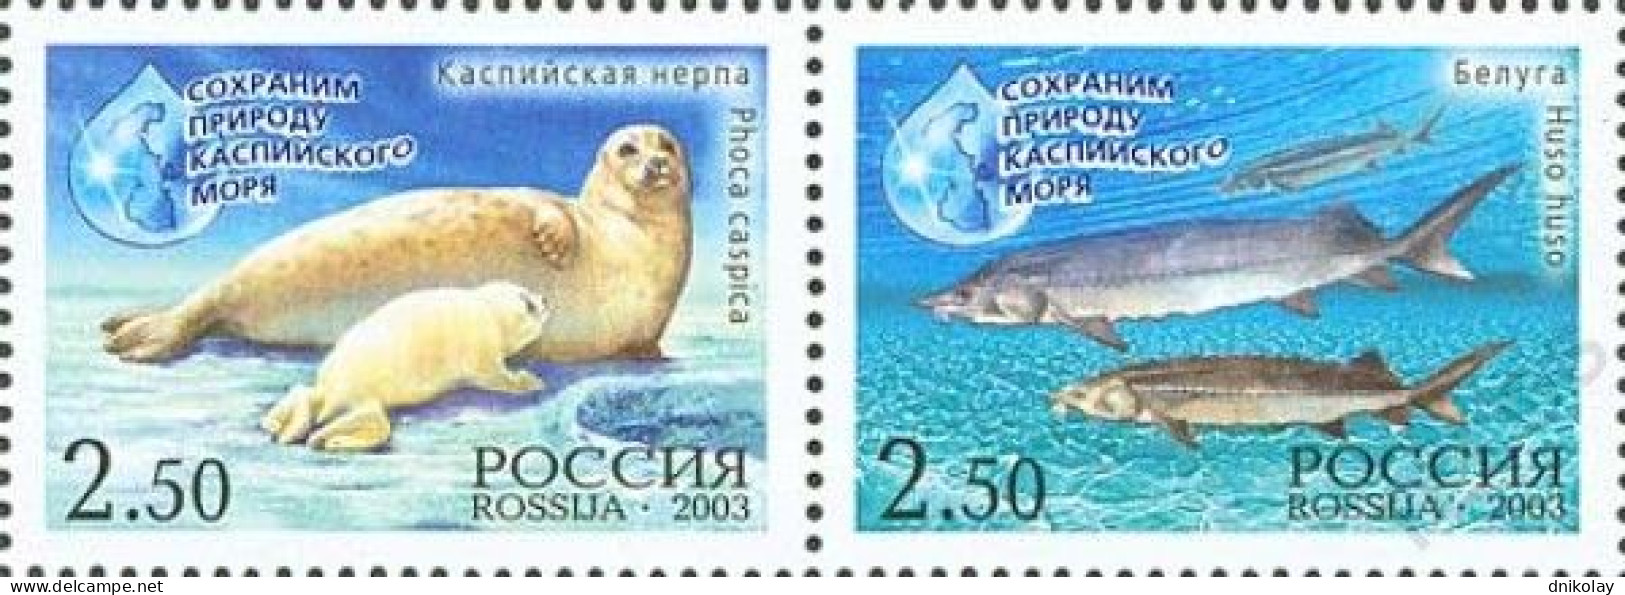 2003 1112 Russia Fauna - Russian-Iranian Joint Issue MNH - Neufs